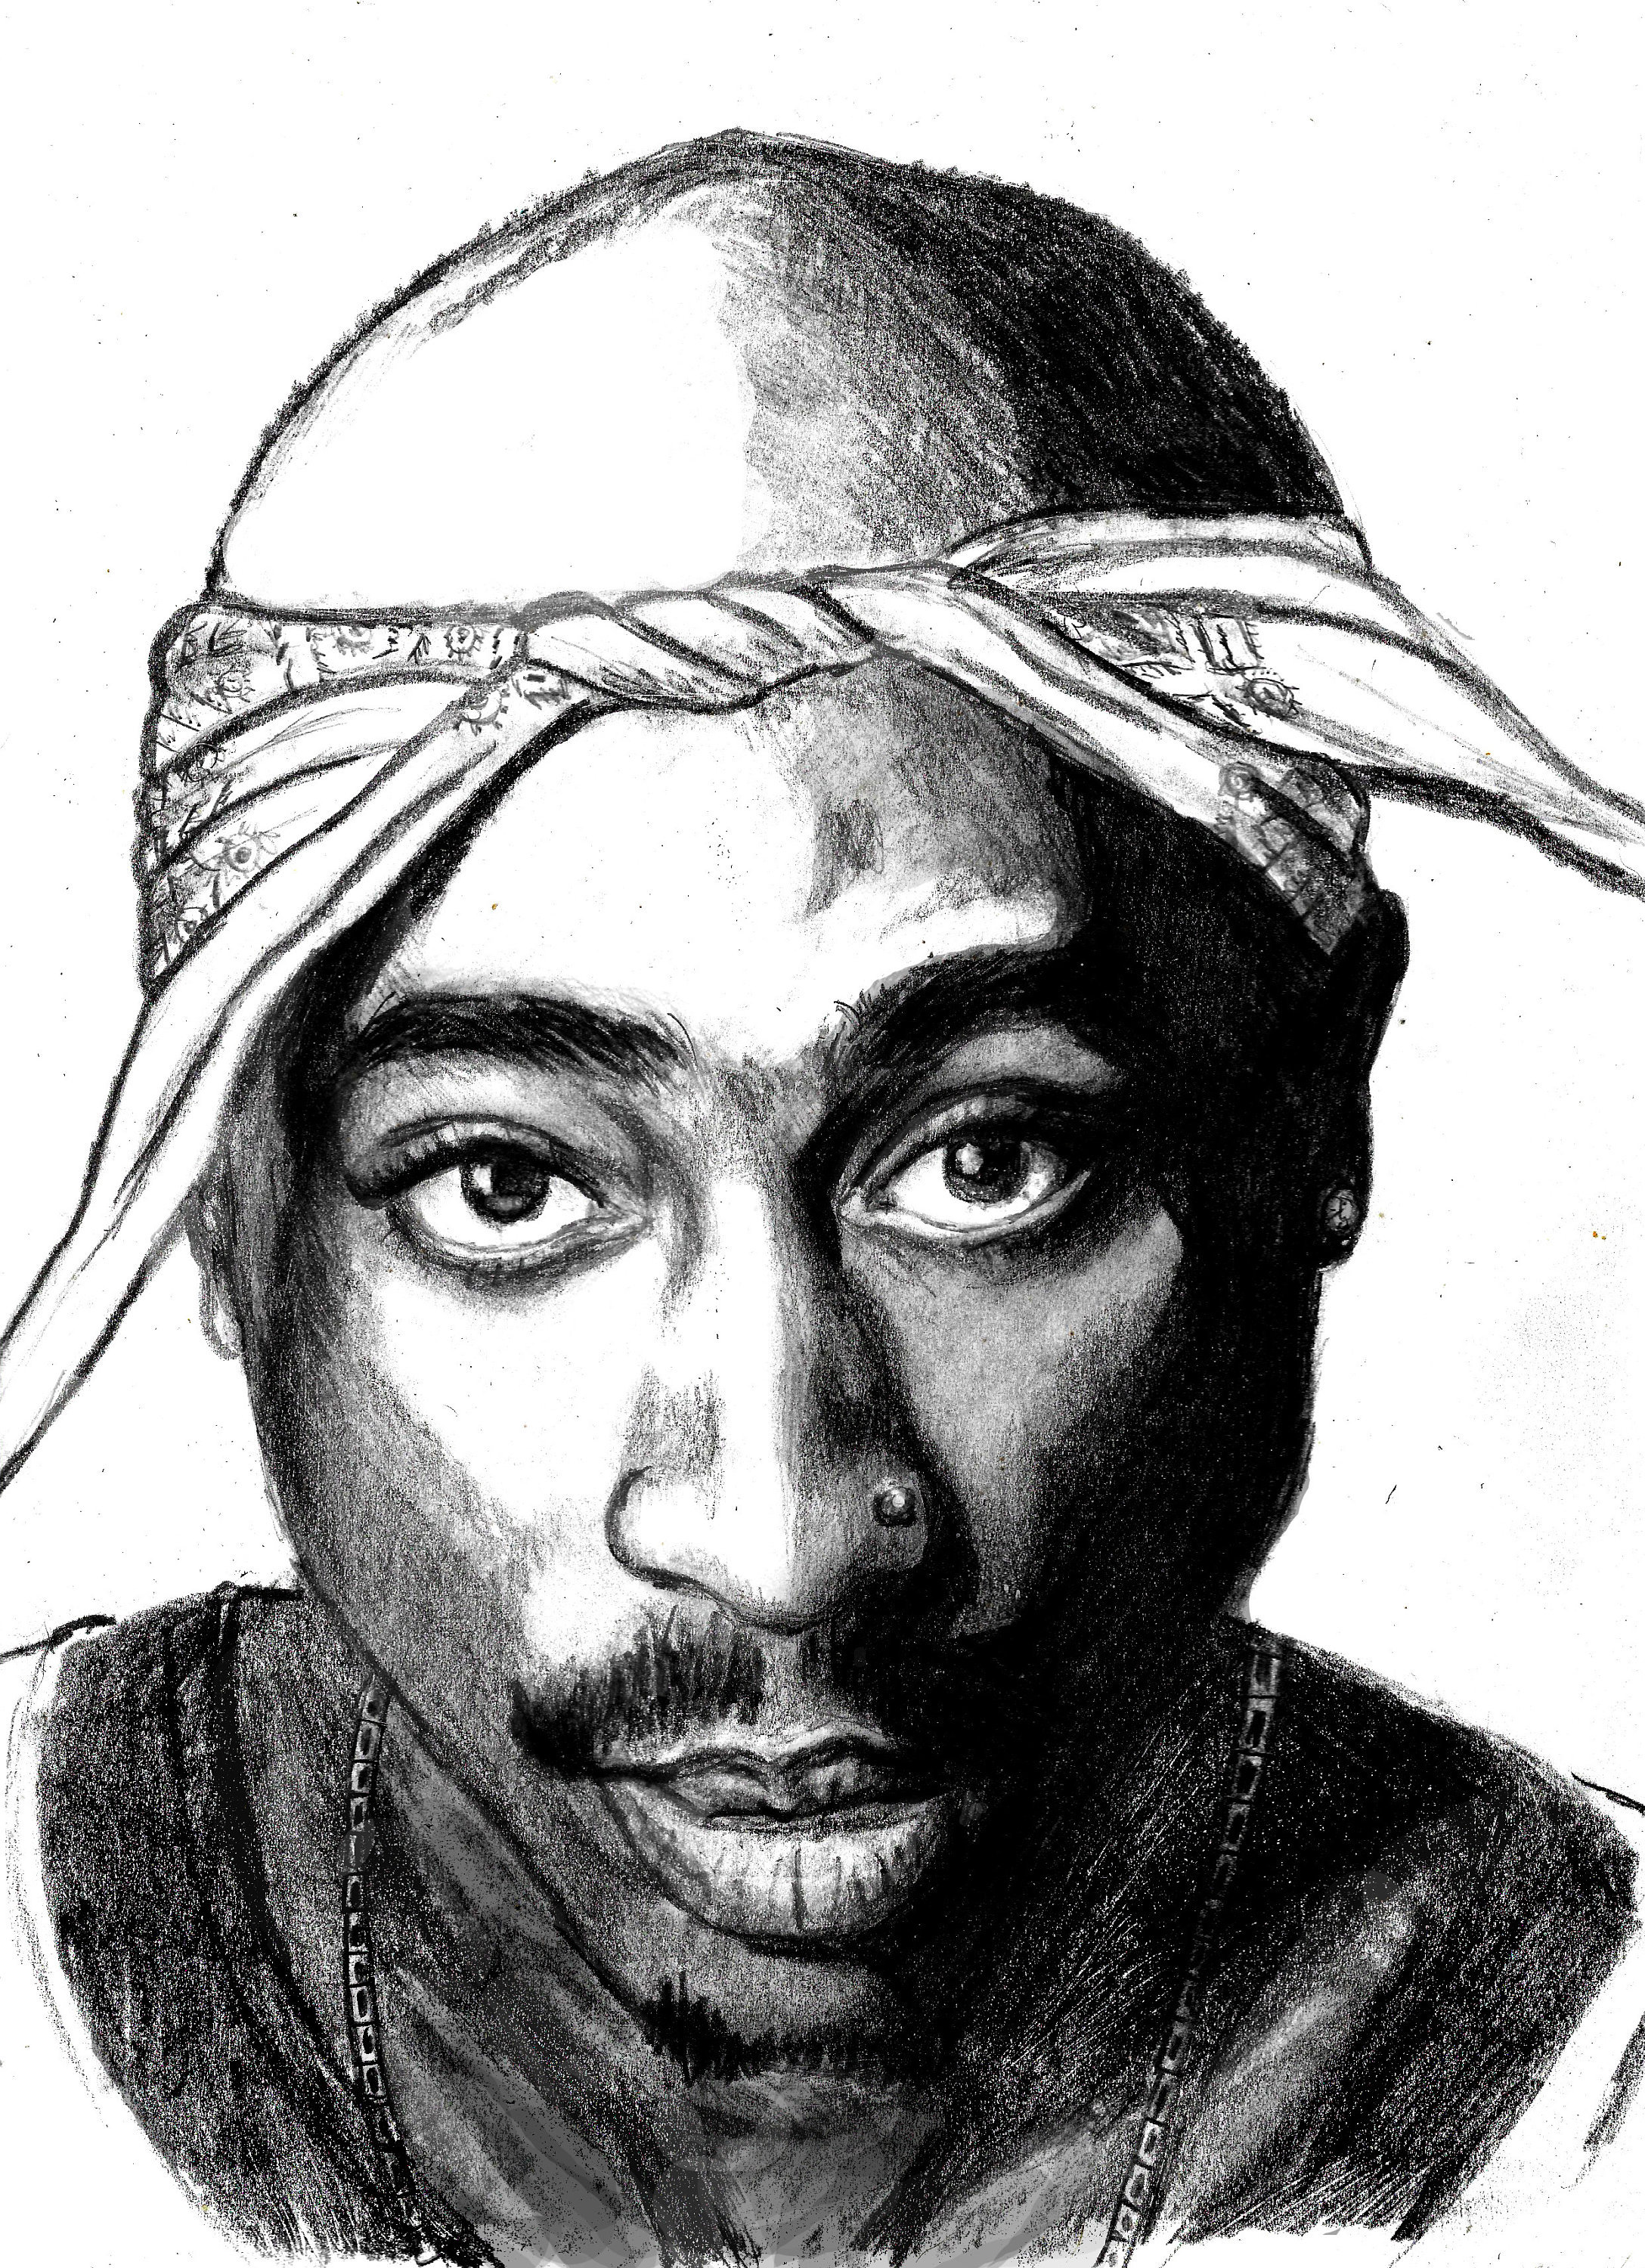 Tupac Shakur print from original pencil drawing 2pac Etsy